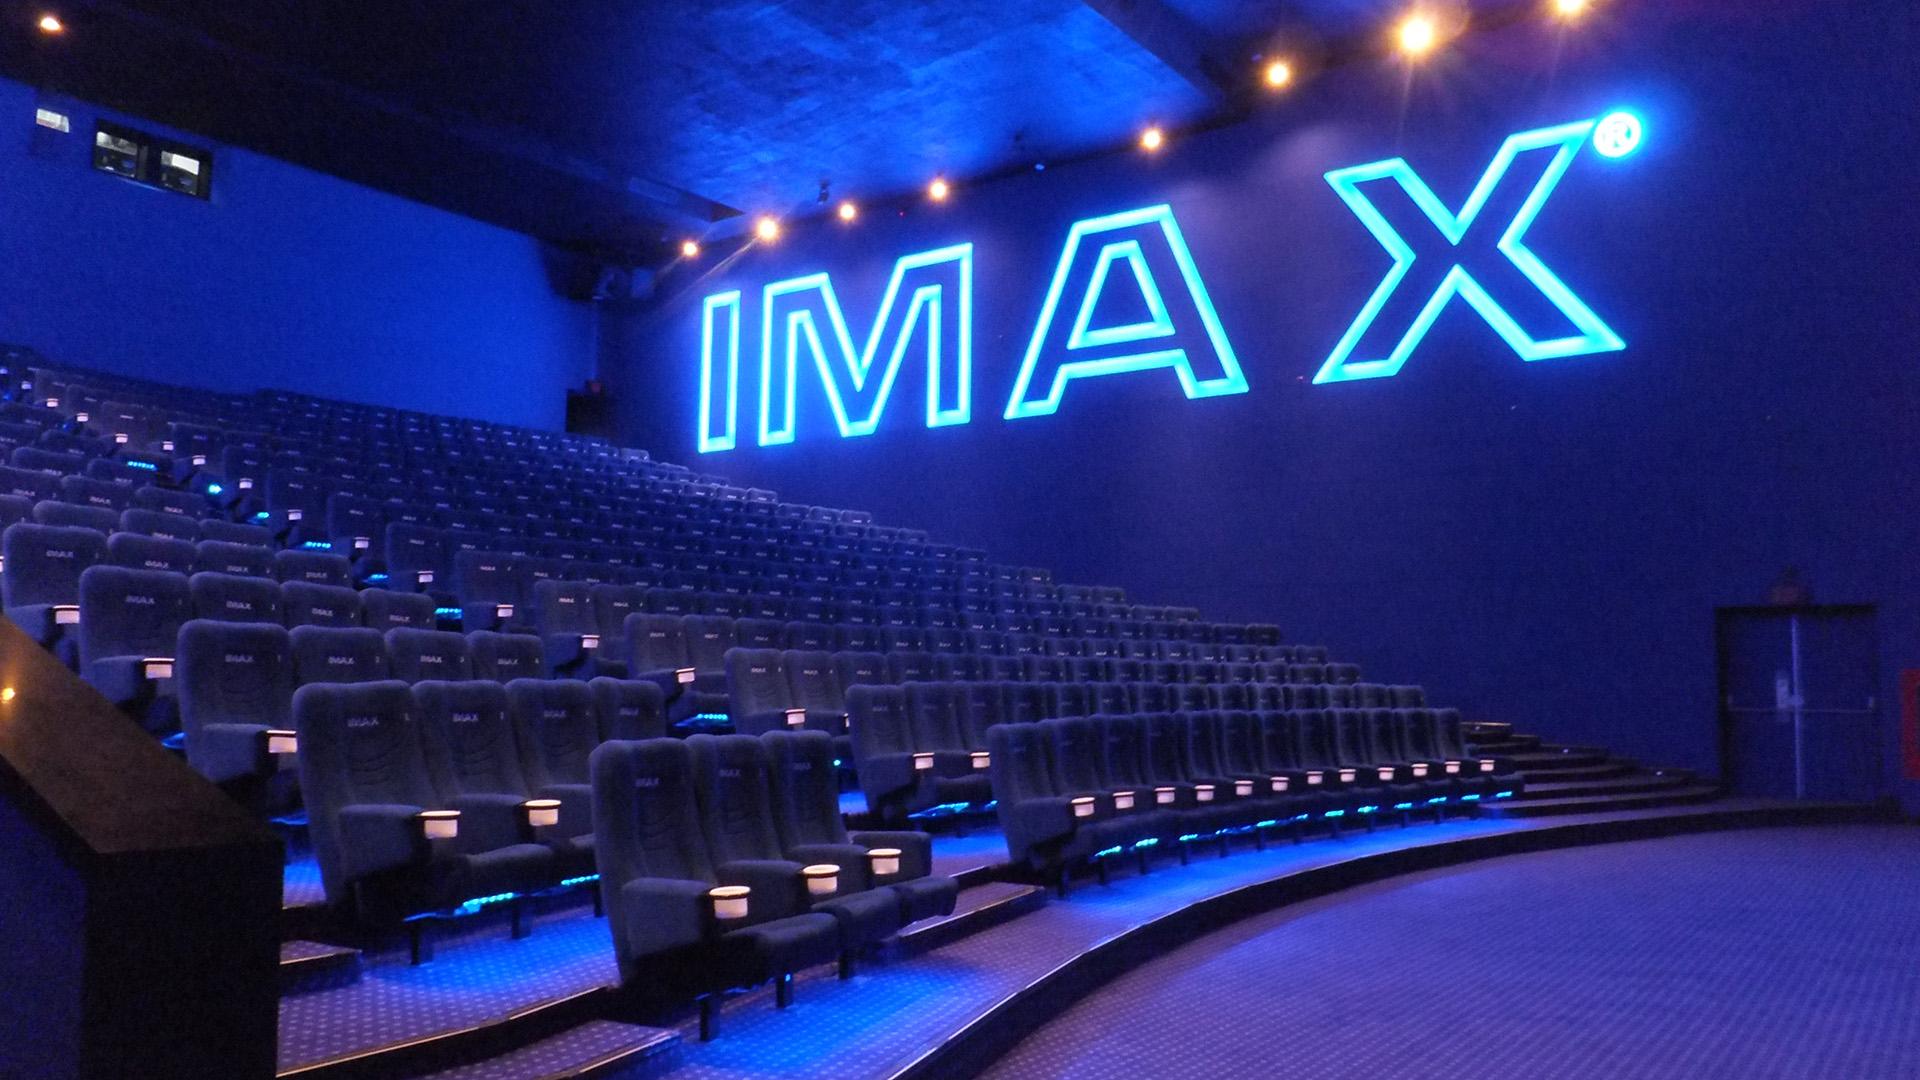 IMAX Colección Definitiva